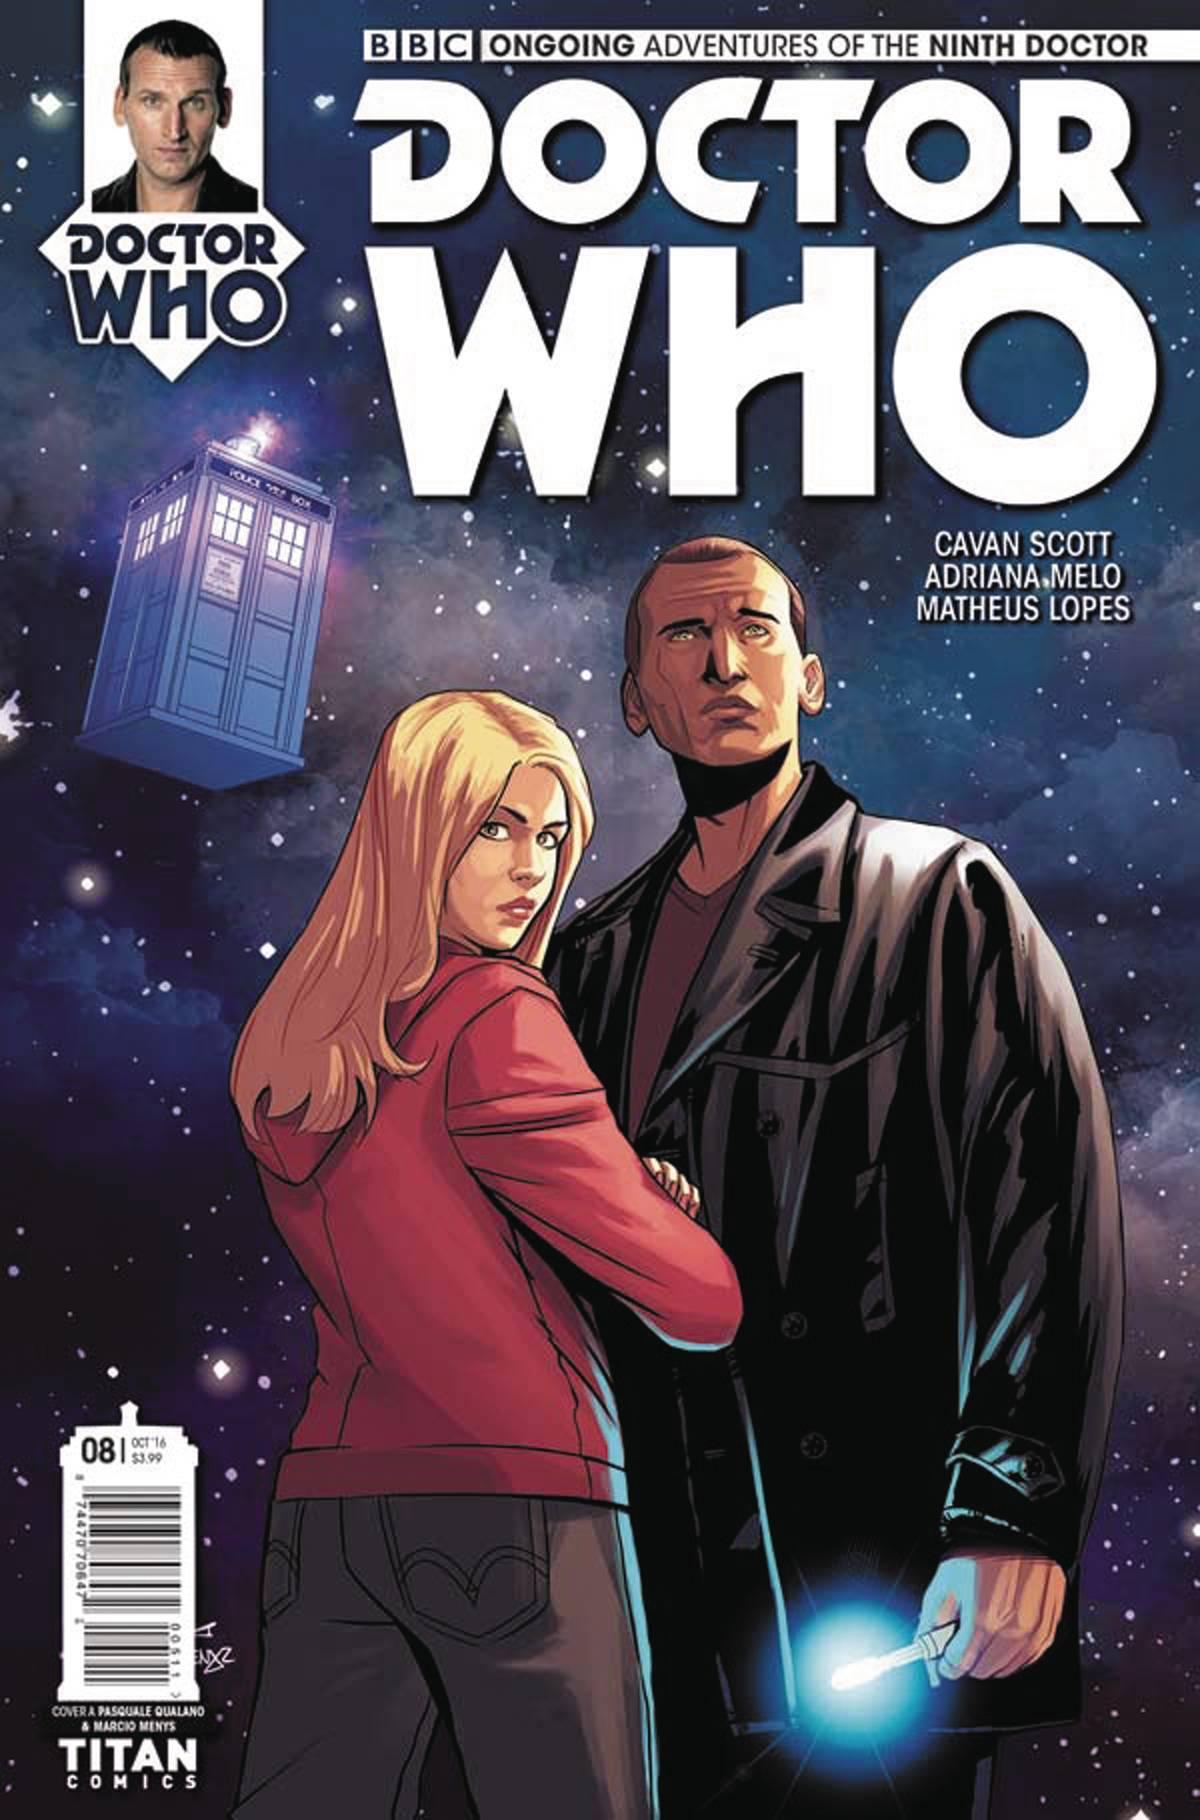 DOCTOR WHO 9TH VOL 2 #8 - Kings Comics